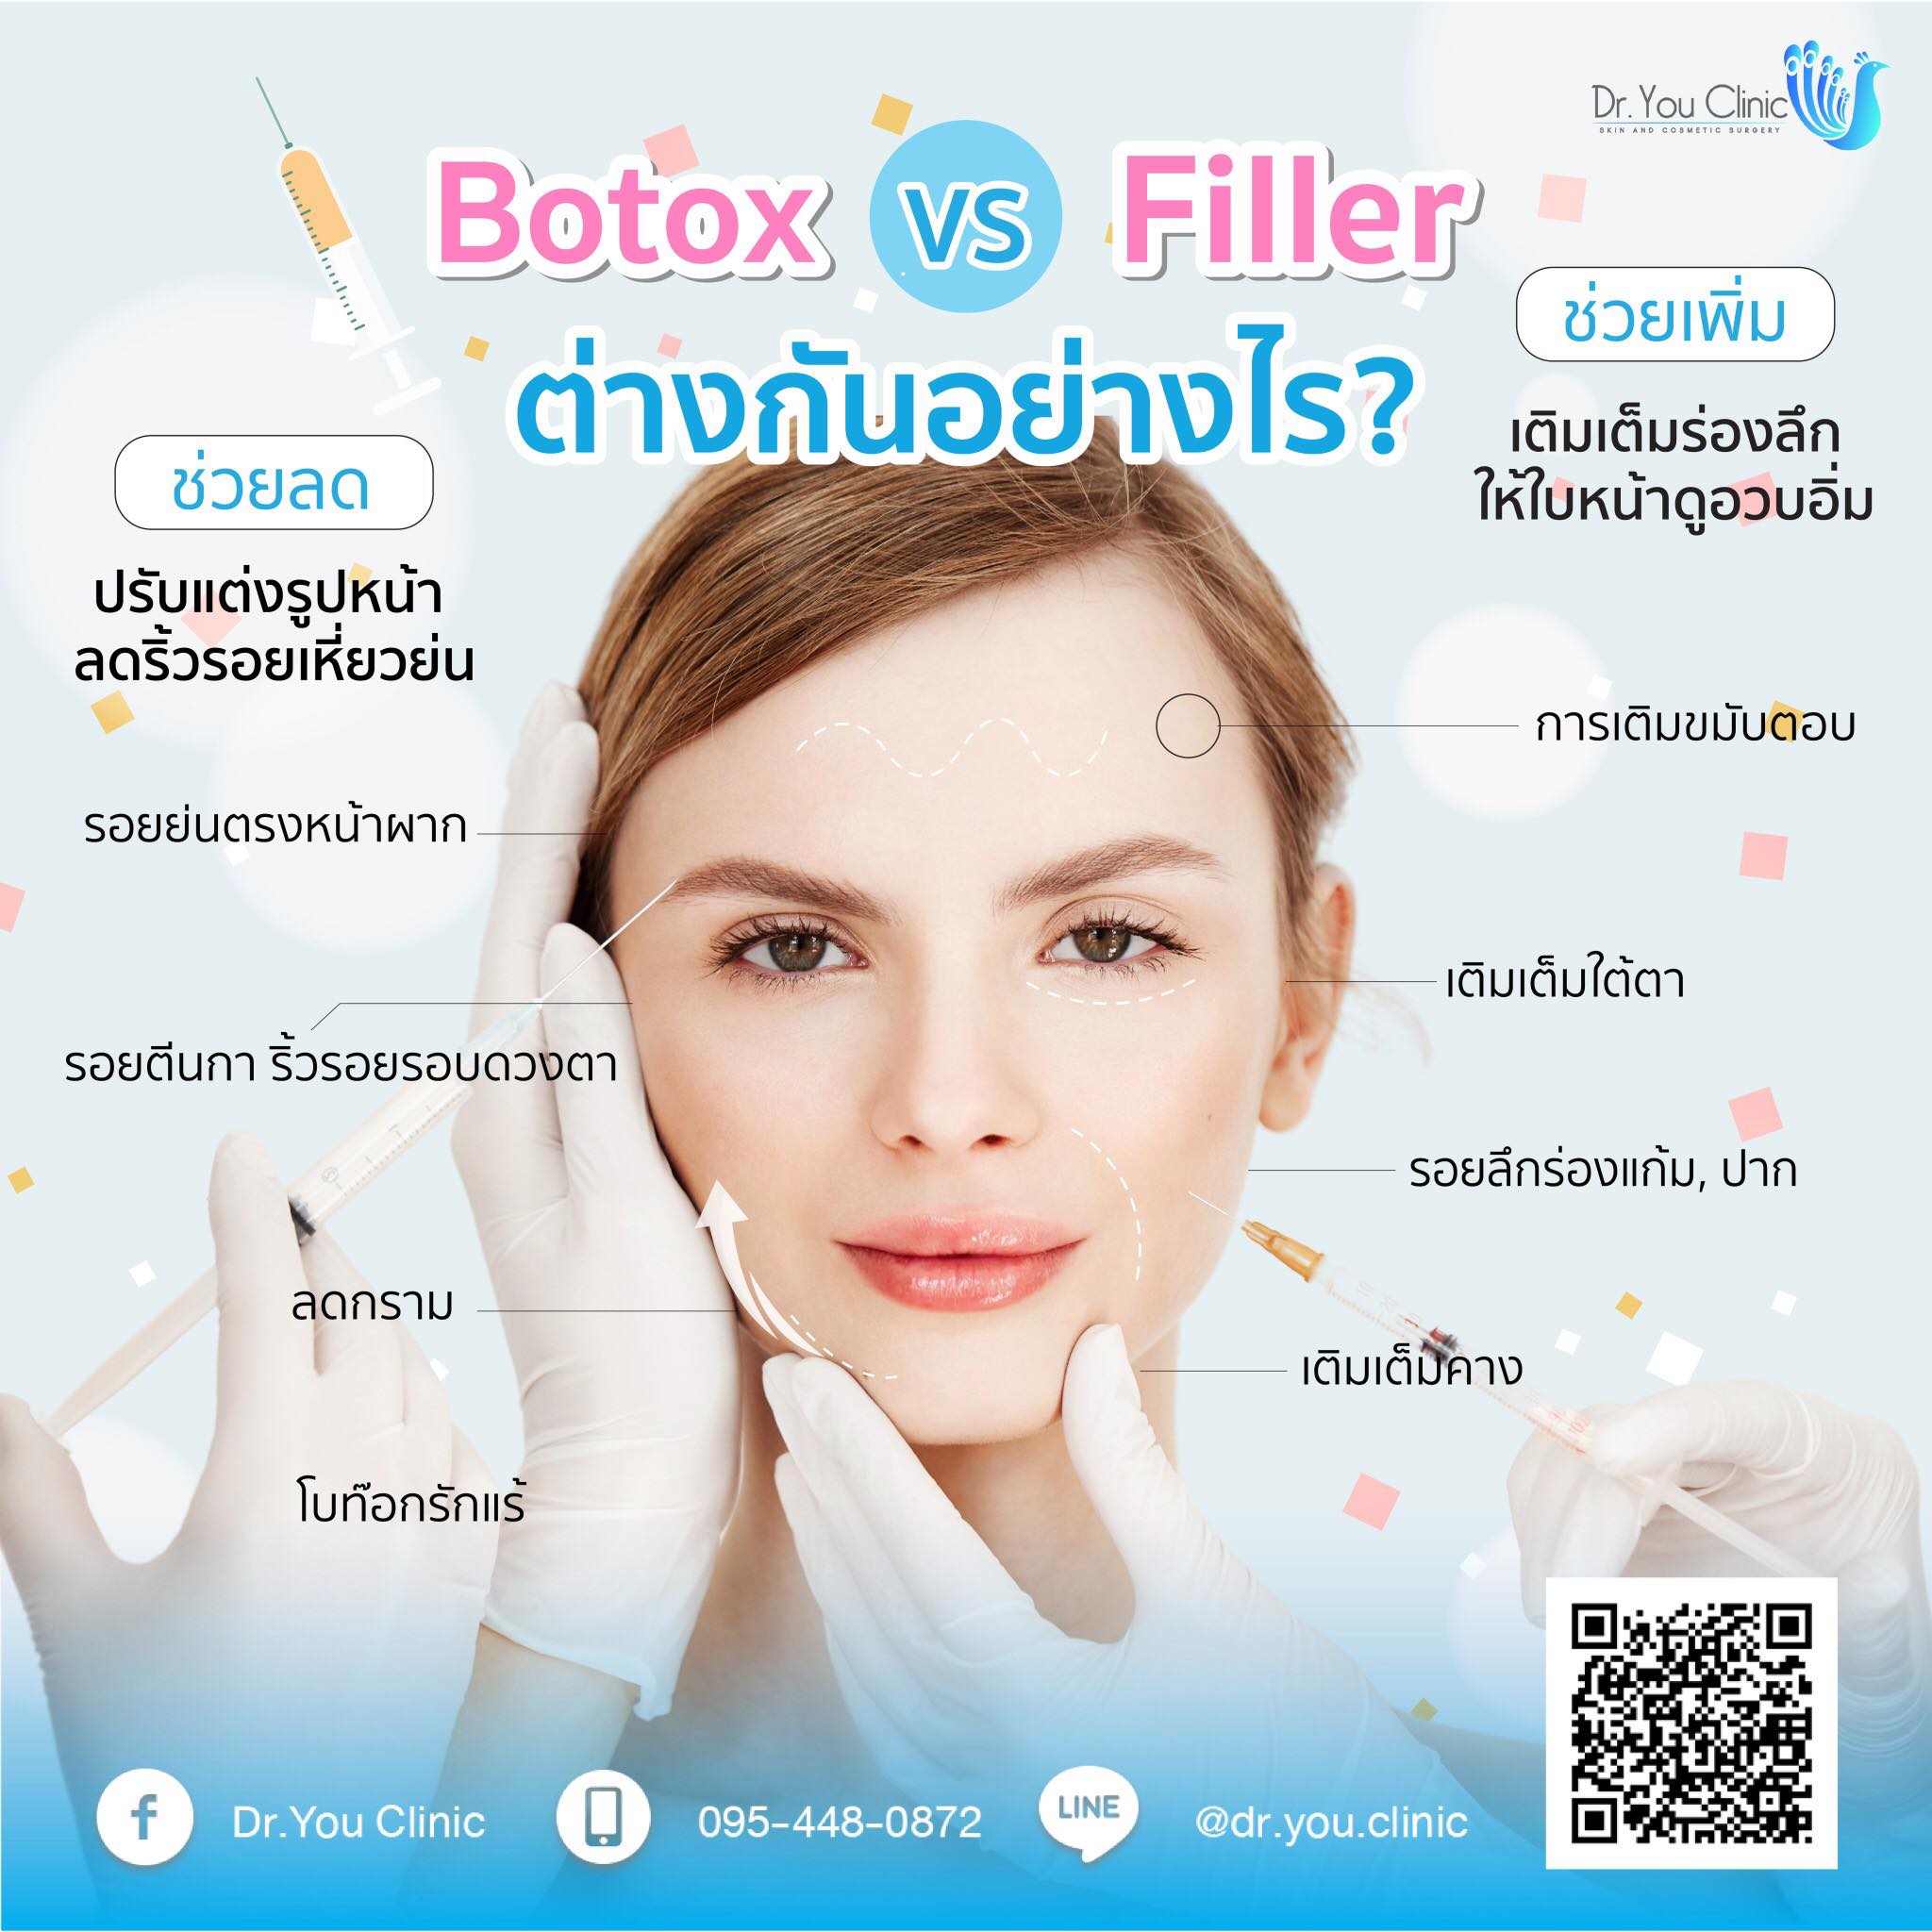 Botox vs Filler ต่างกันอย่างไร?